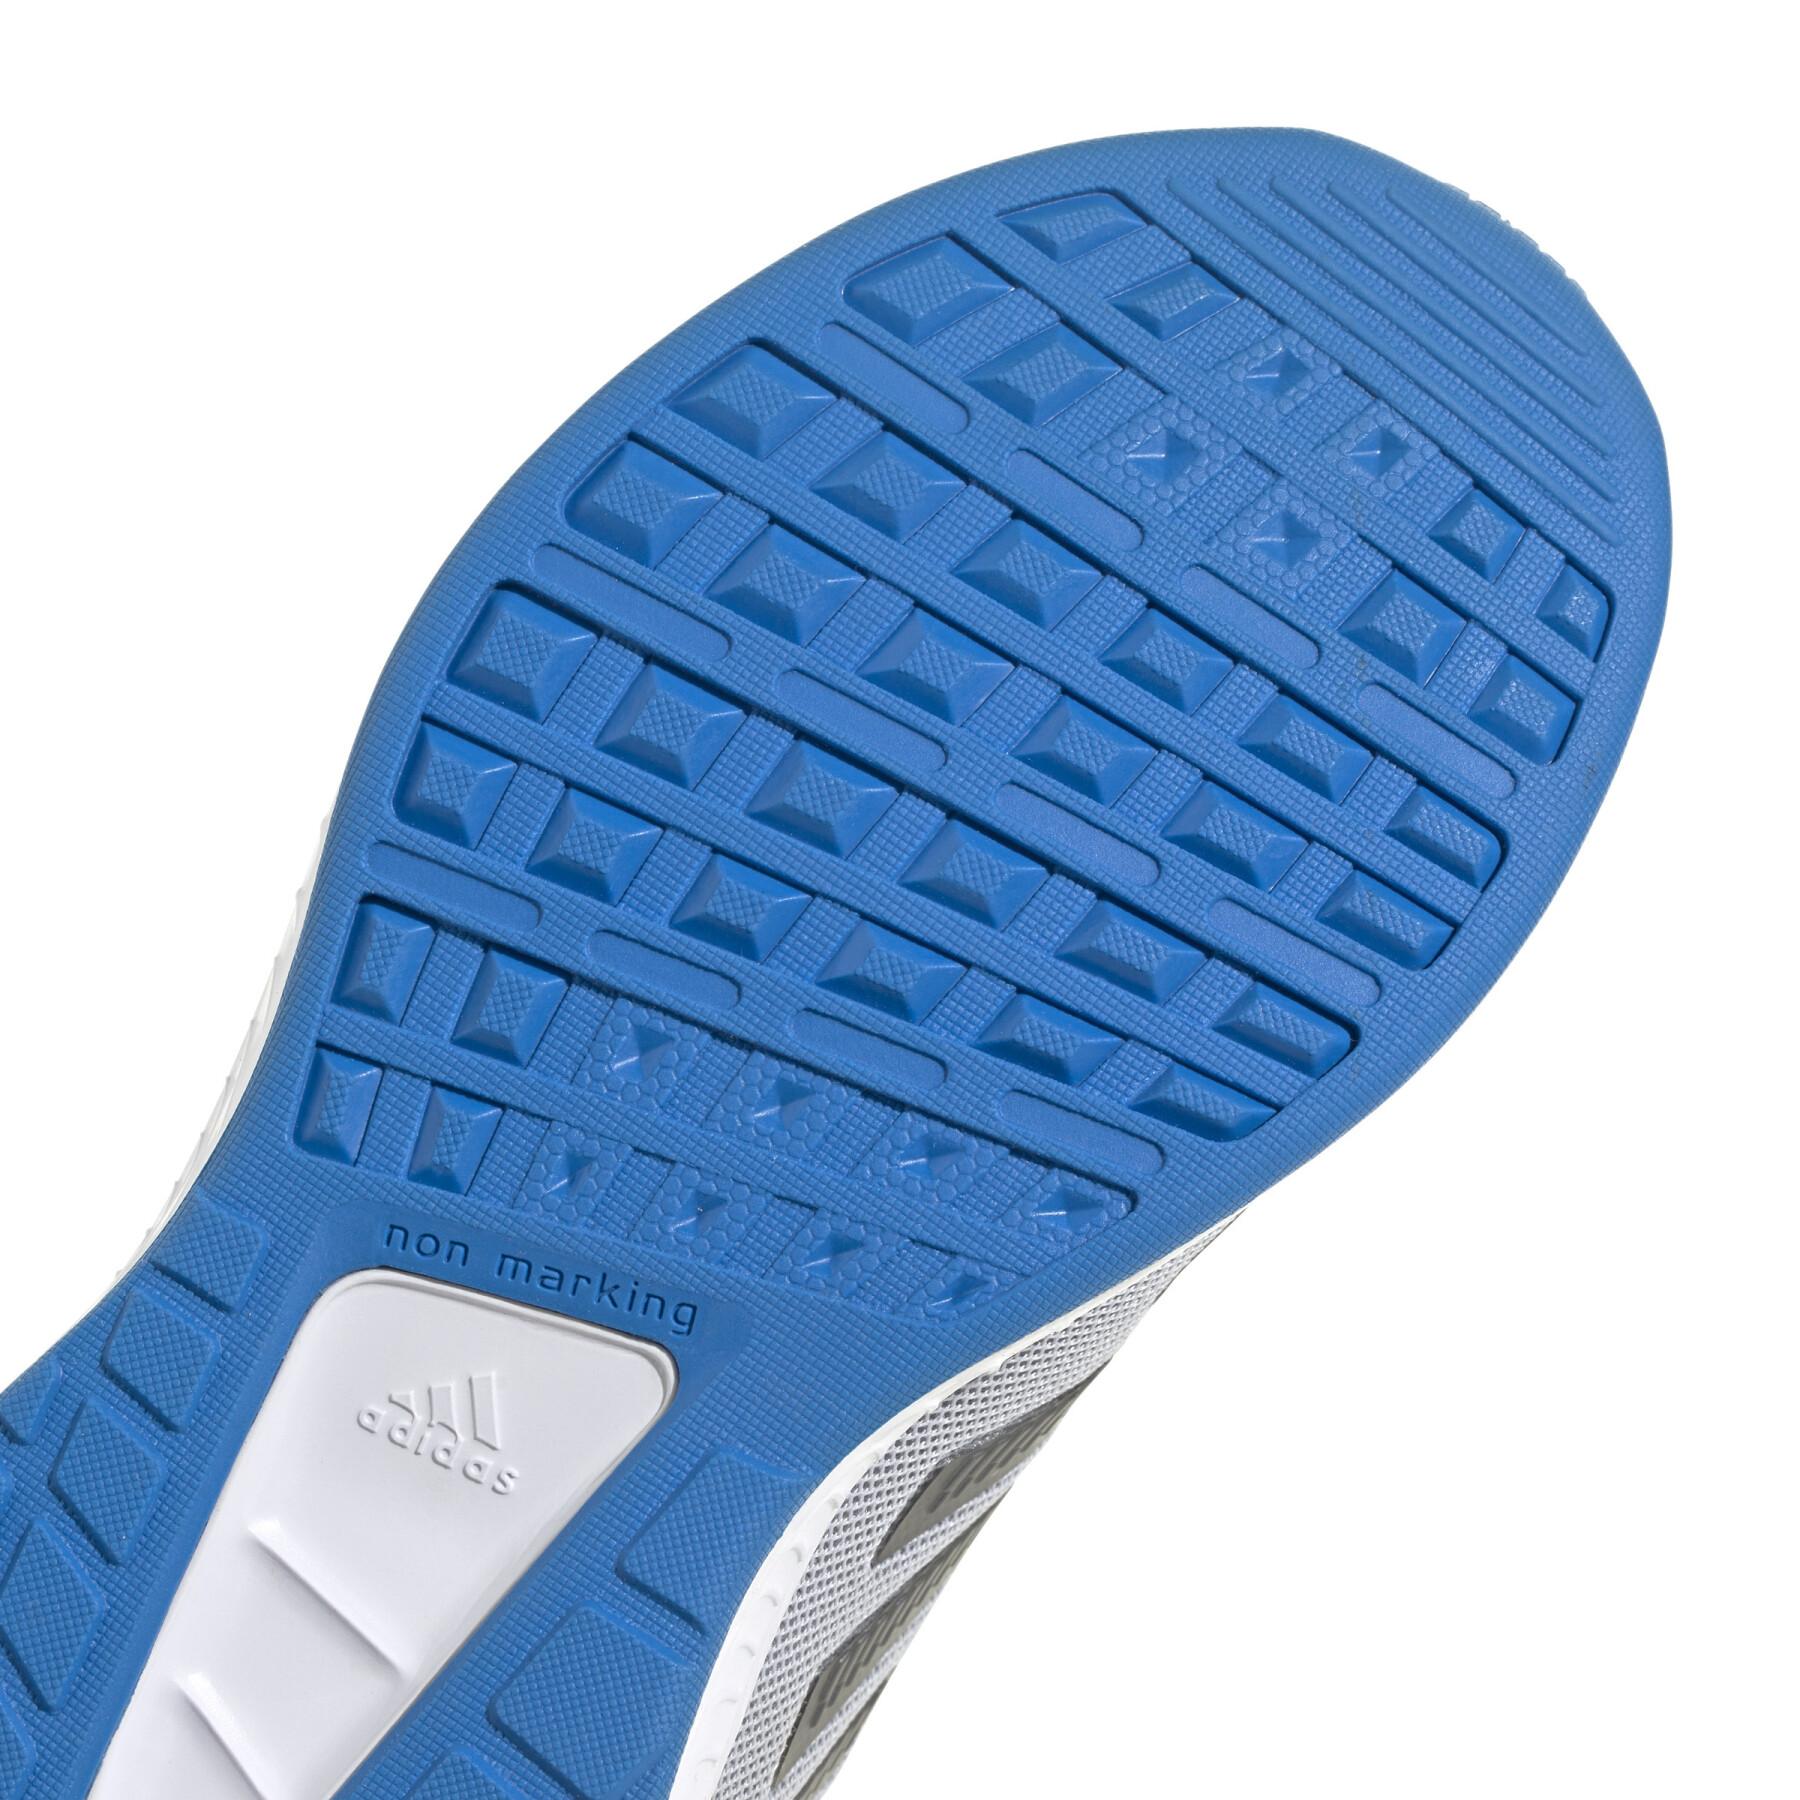 Scarpe da corsa per bambini adidas Runfalcon 2.0